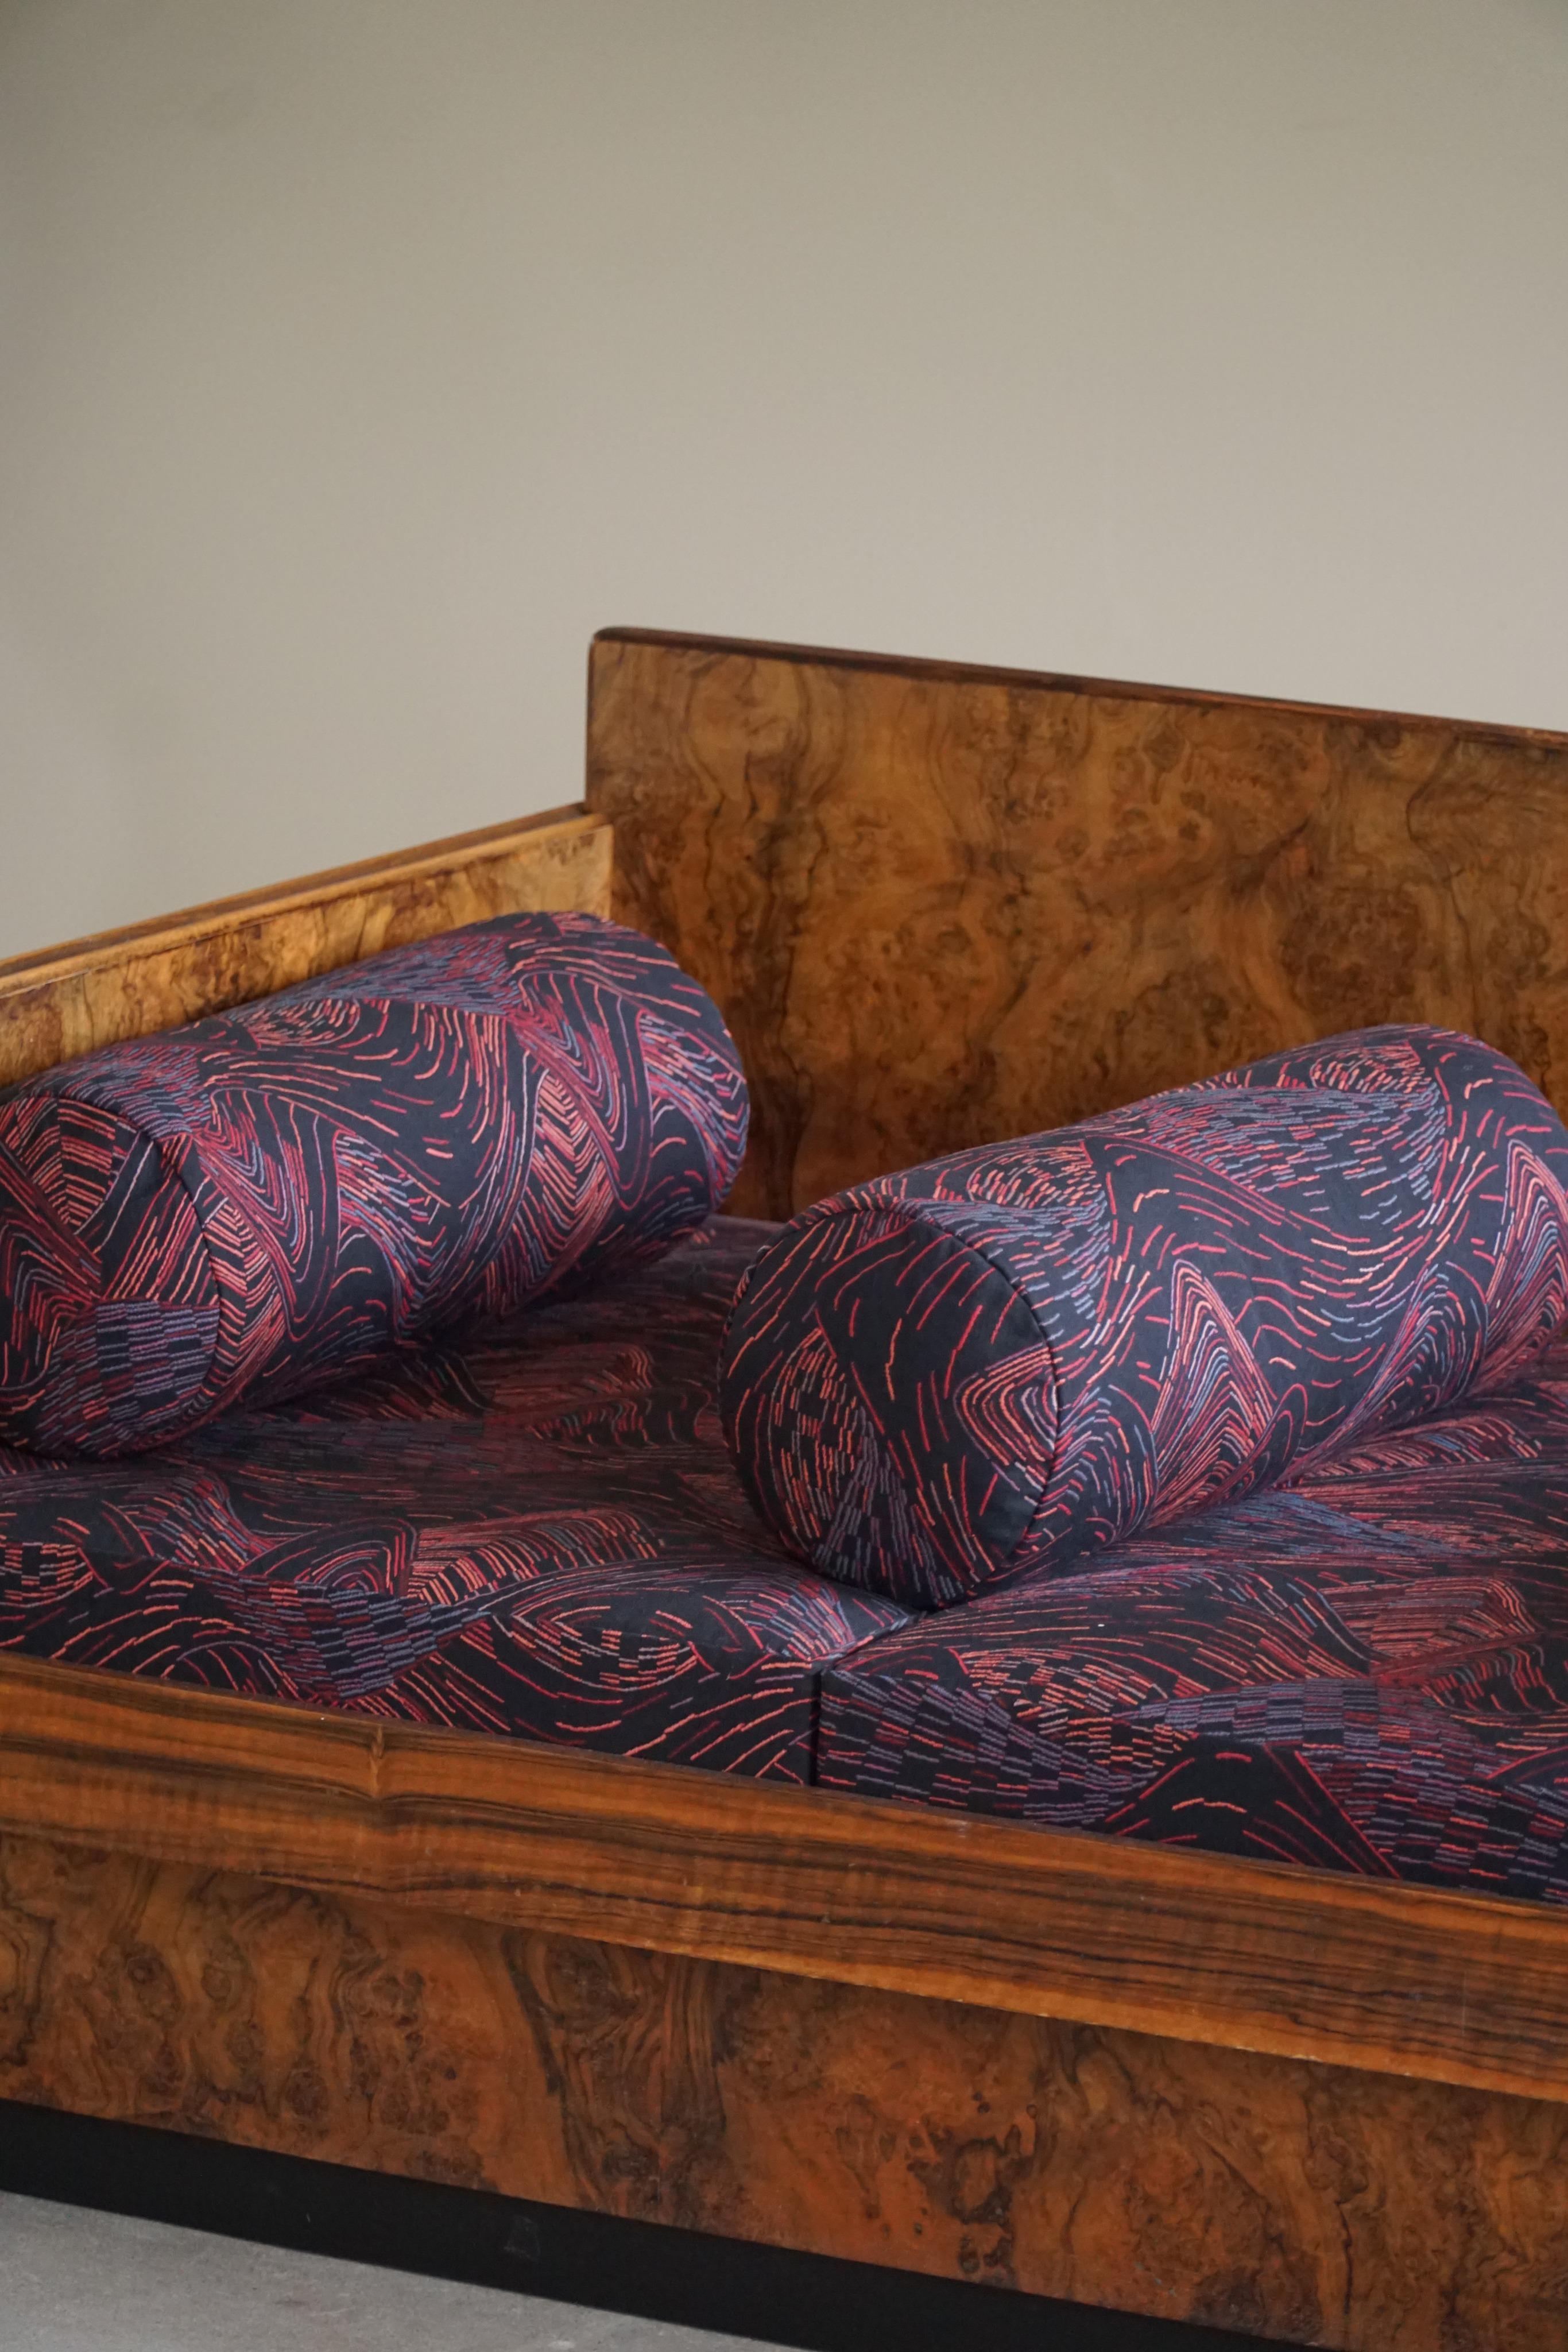 Sculptural Sofa in Nutwood & Burl, Art Deco, Swedish Cabinetmaker, 1940s For Sale 3